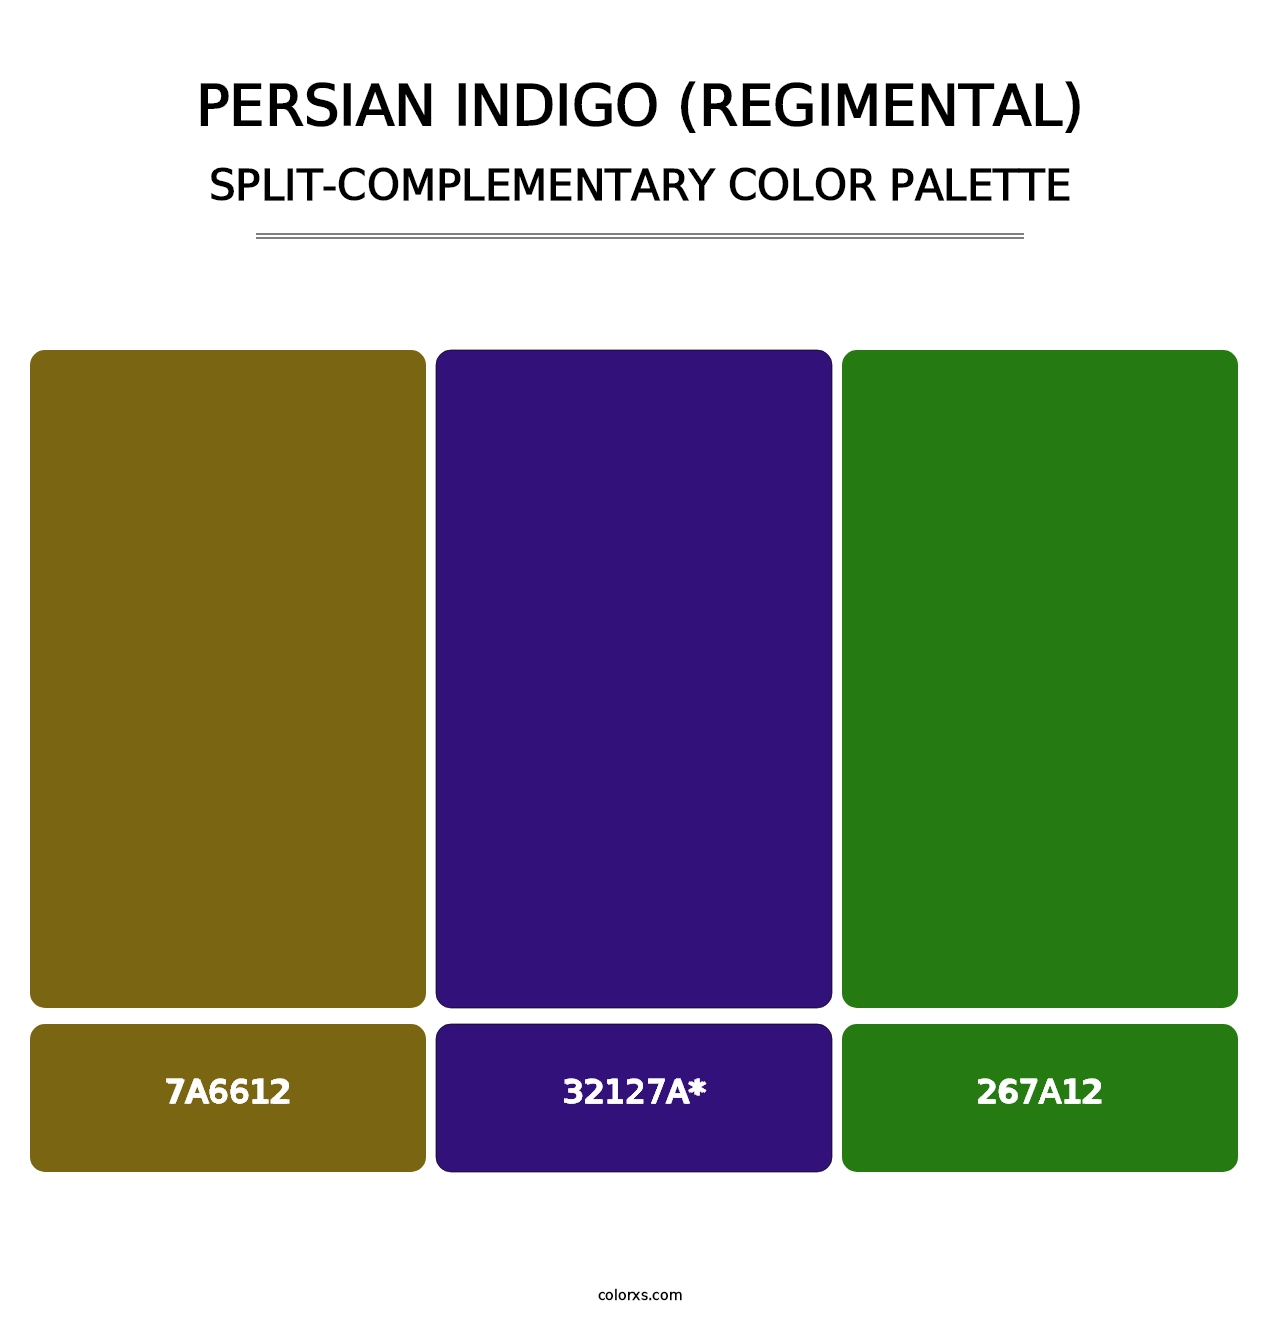 Persian Indigo (Regimental) - Split-Complementary Color Palette